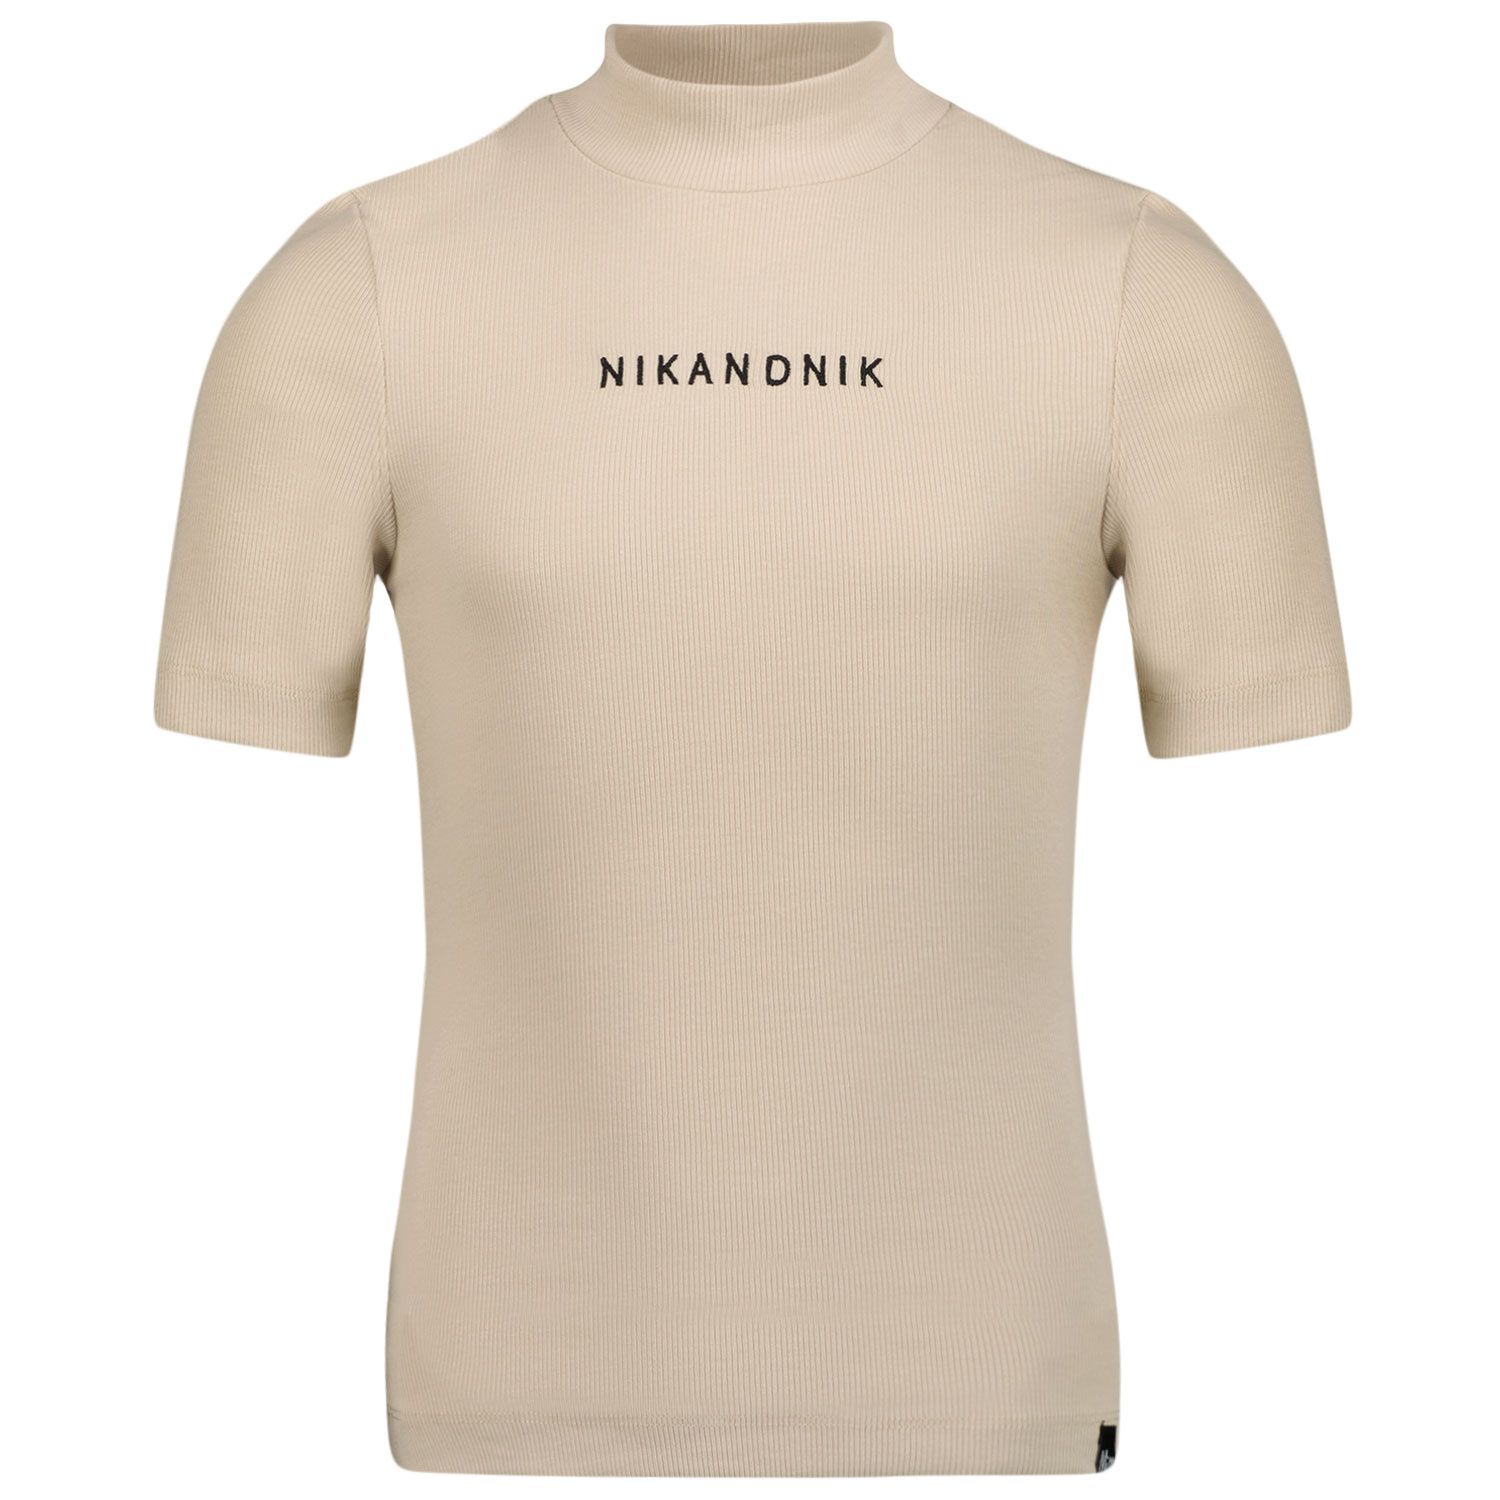 Afbeelding van NIK&NIK G8555 kinder t-shirt beige